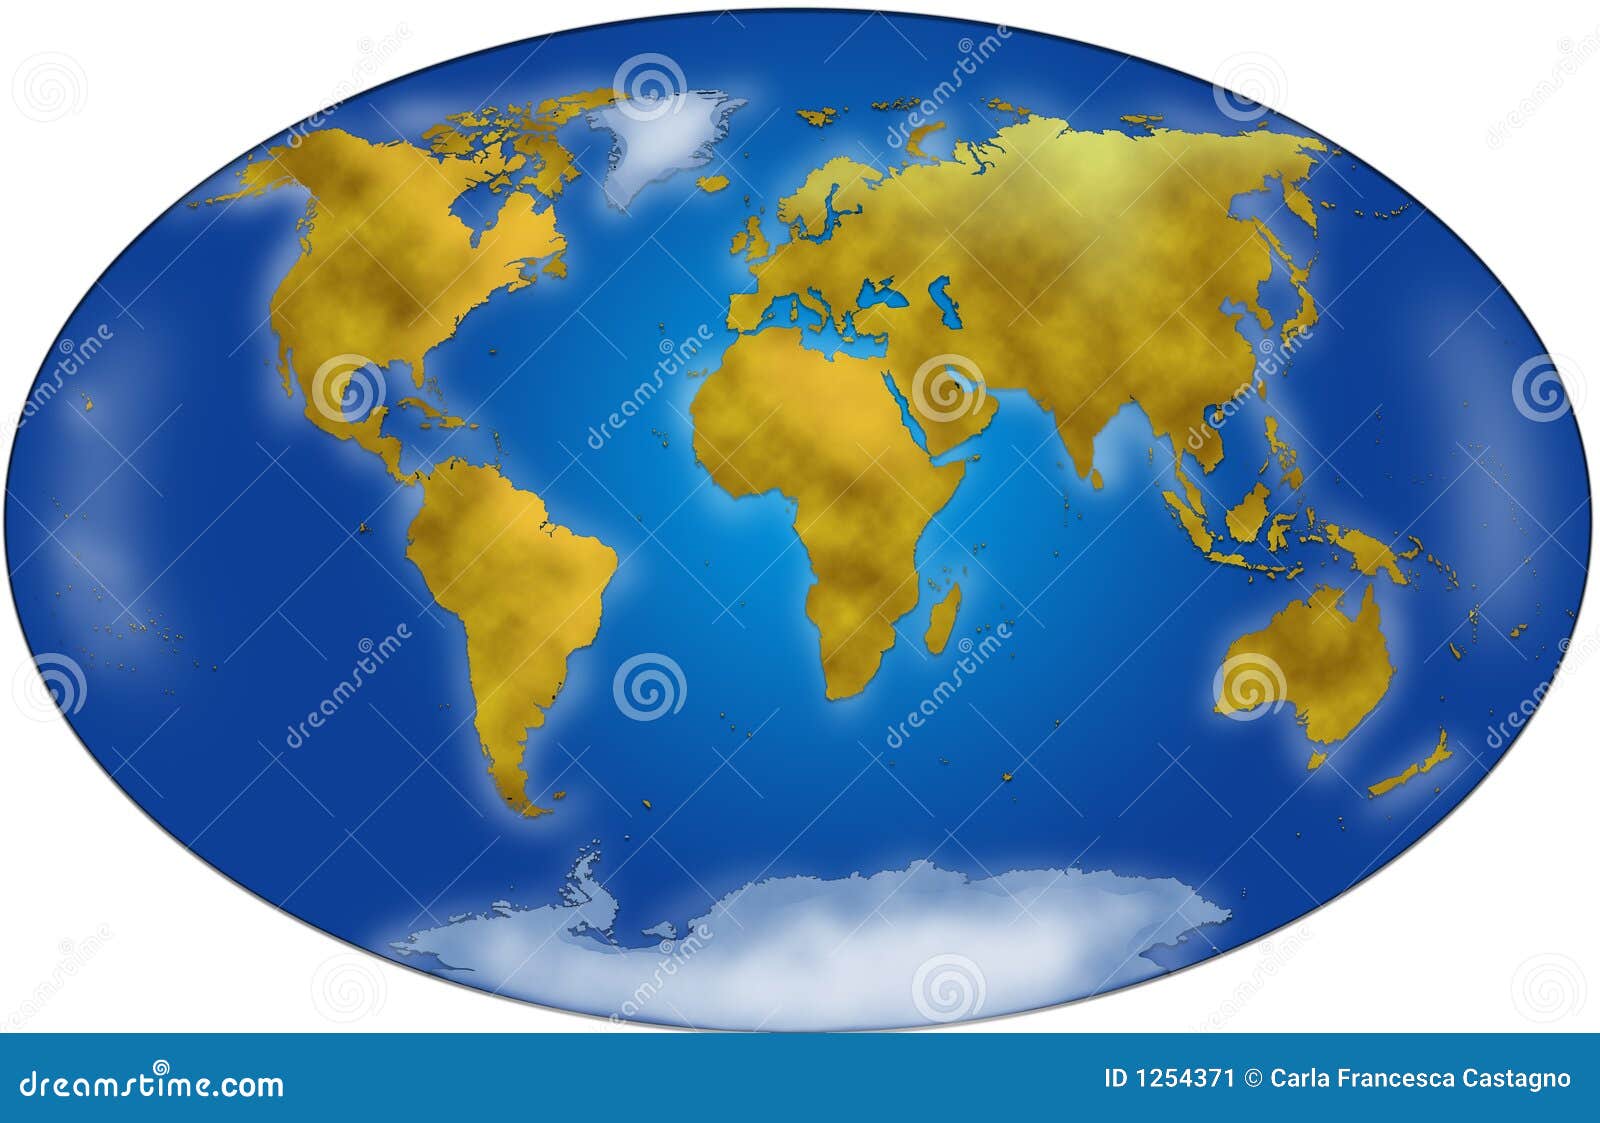 World map planisphere stock illustration. Image of america - 1254371